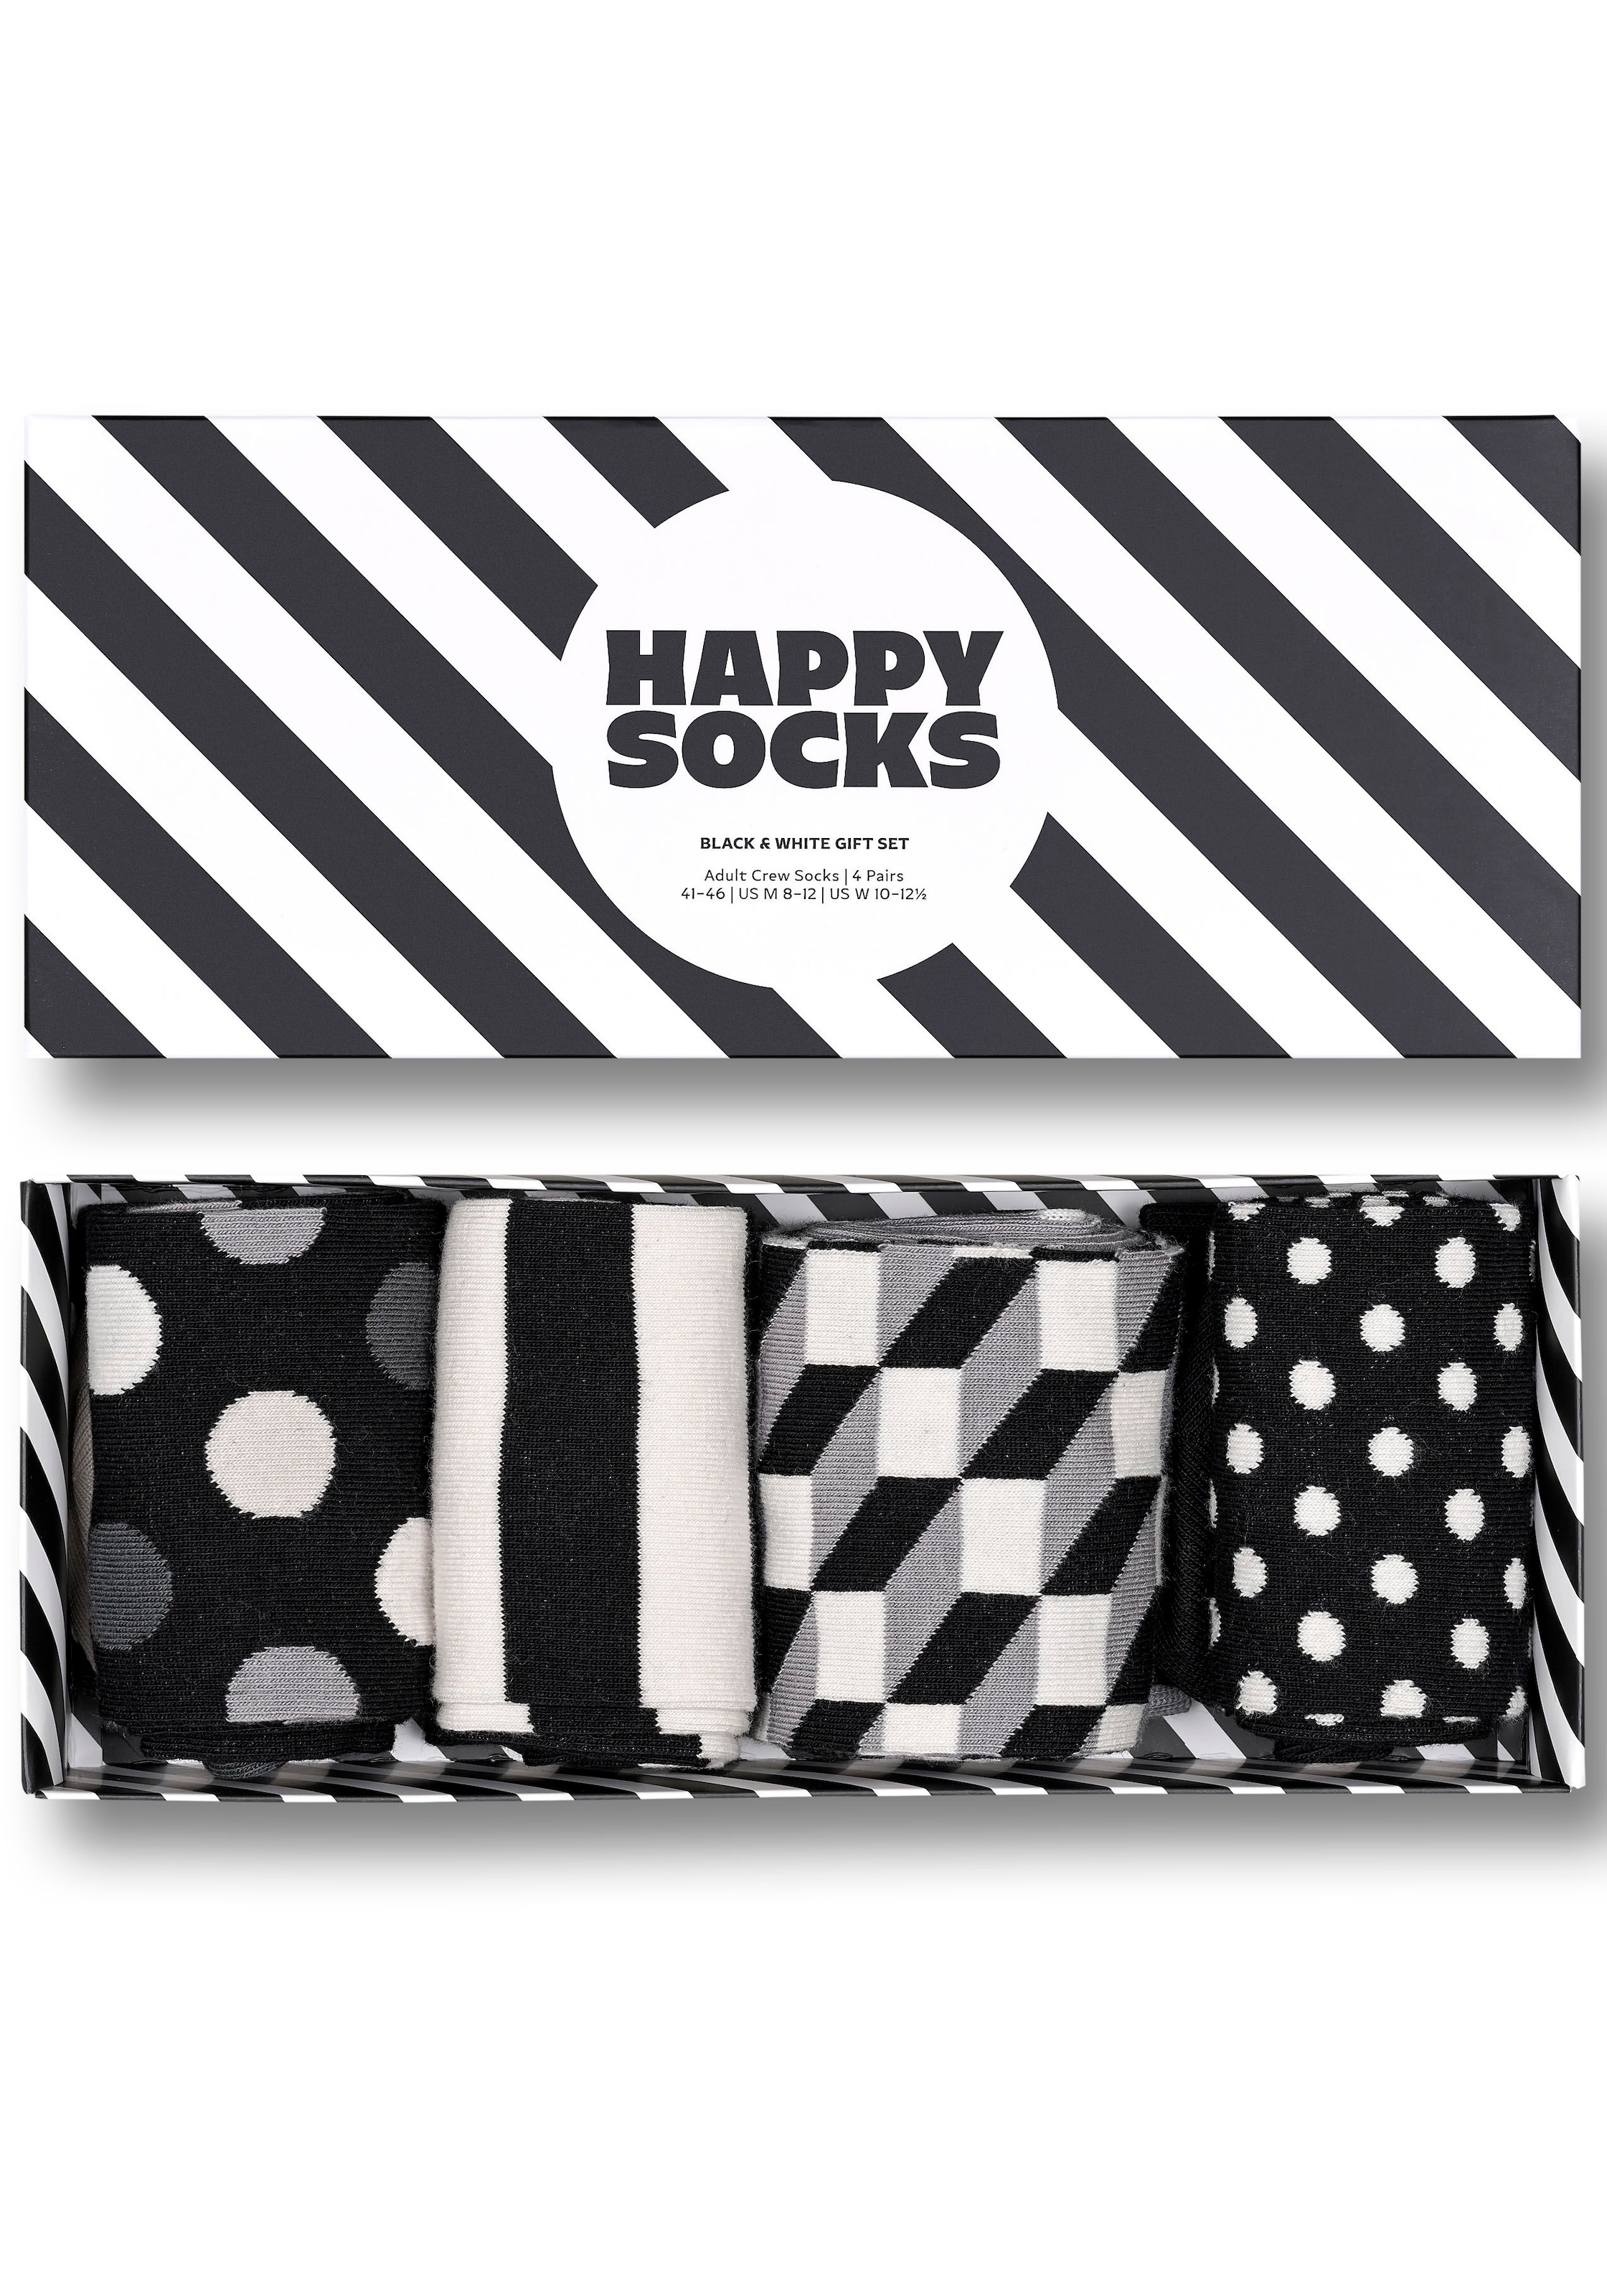 Happy Black Gift kaufen & Socks OTTO bei Paar), Socks 4 (Packung, Classic Set Socken, White